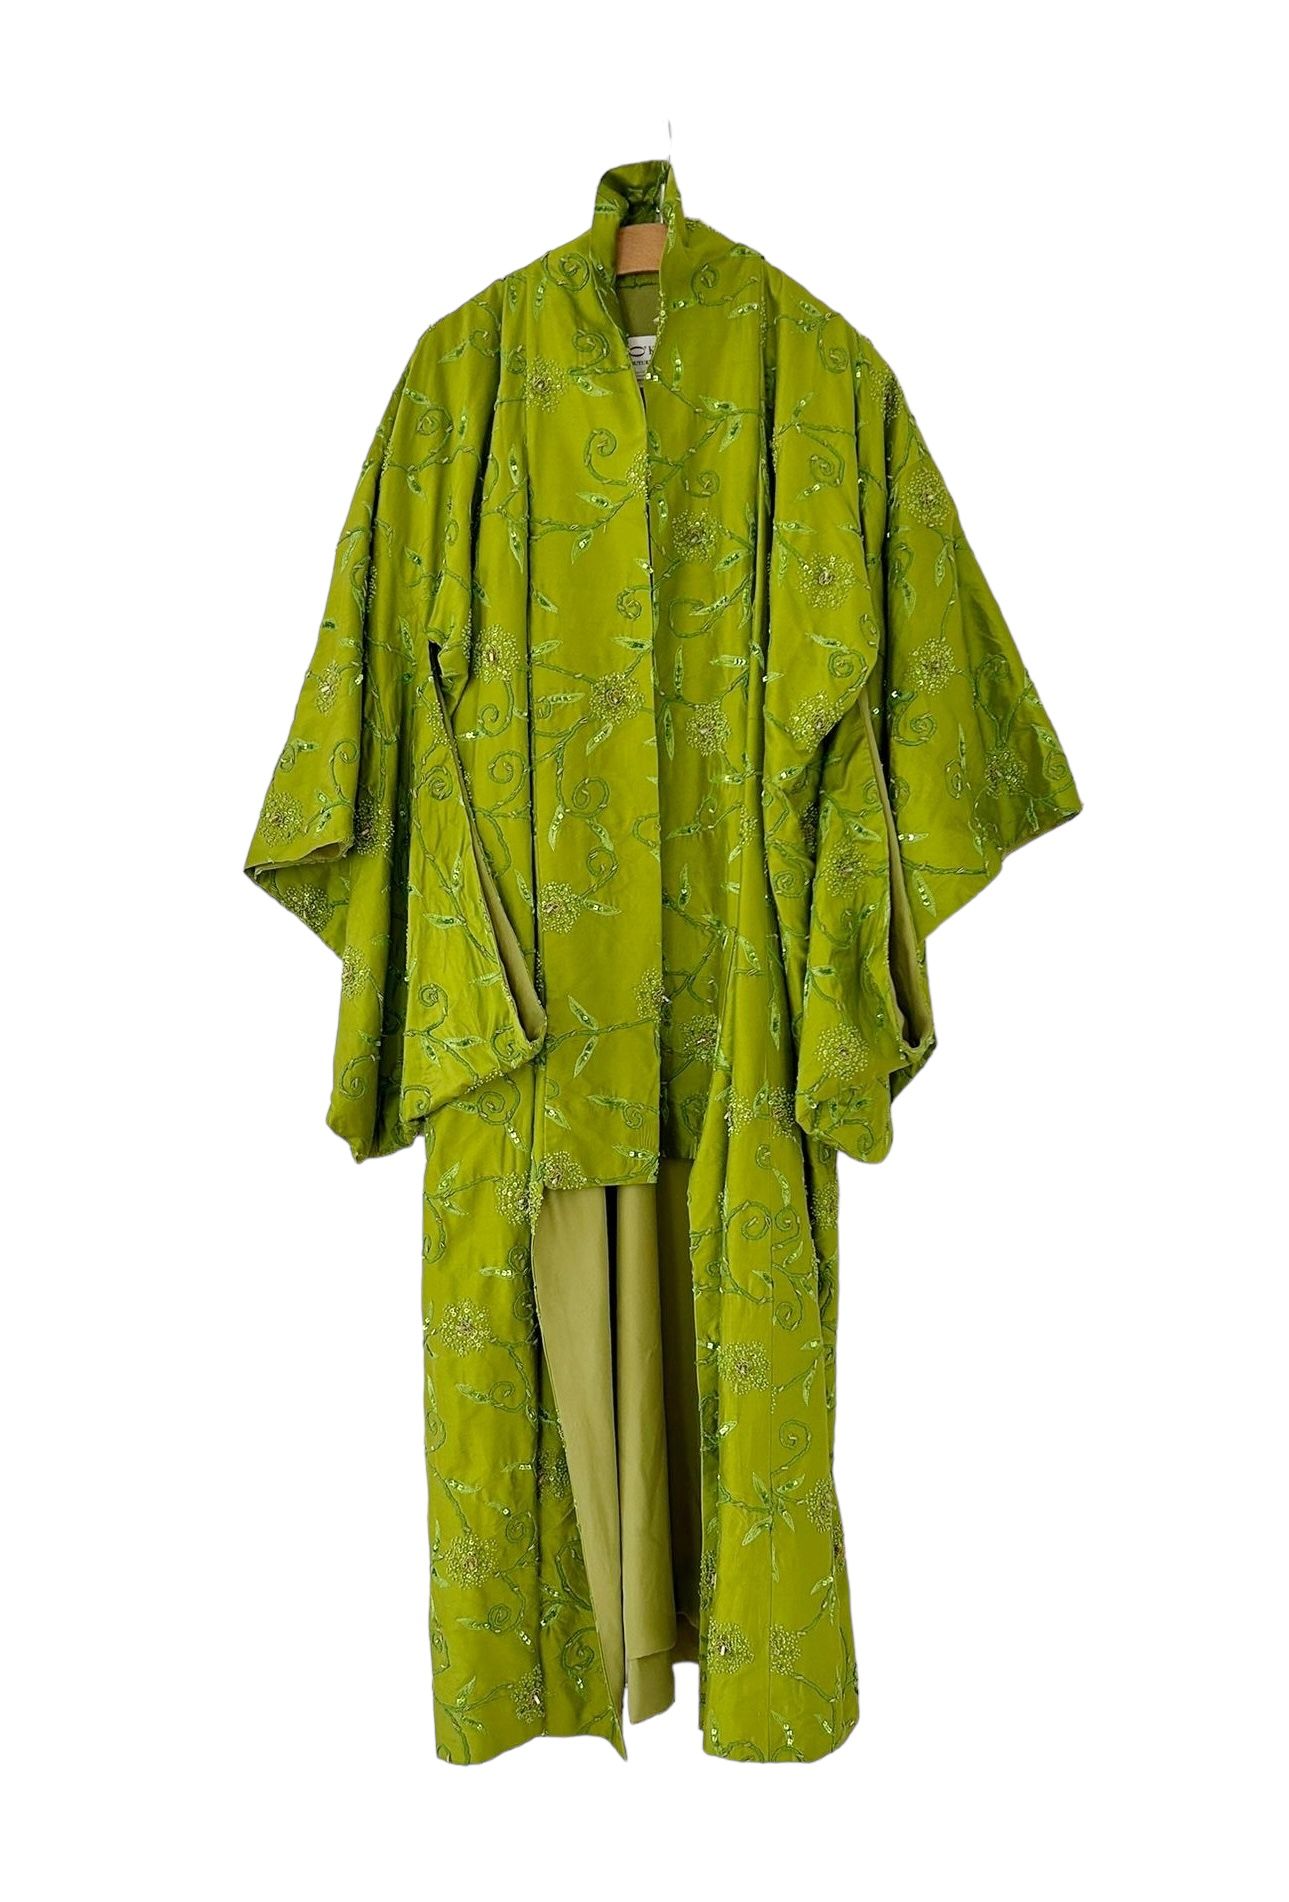 PIO O' KAN - Kimono dame En soie de tonalité verte, brodée et ornementée de pail&hellip;